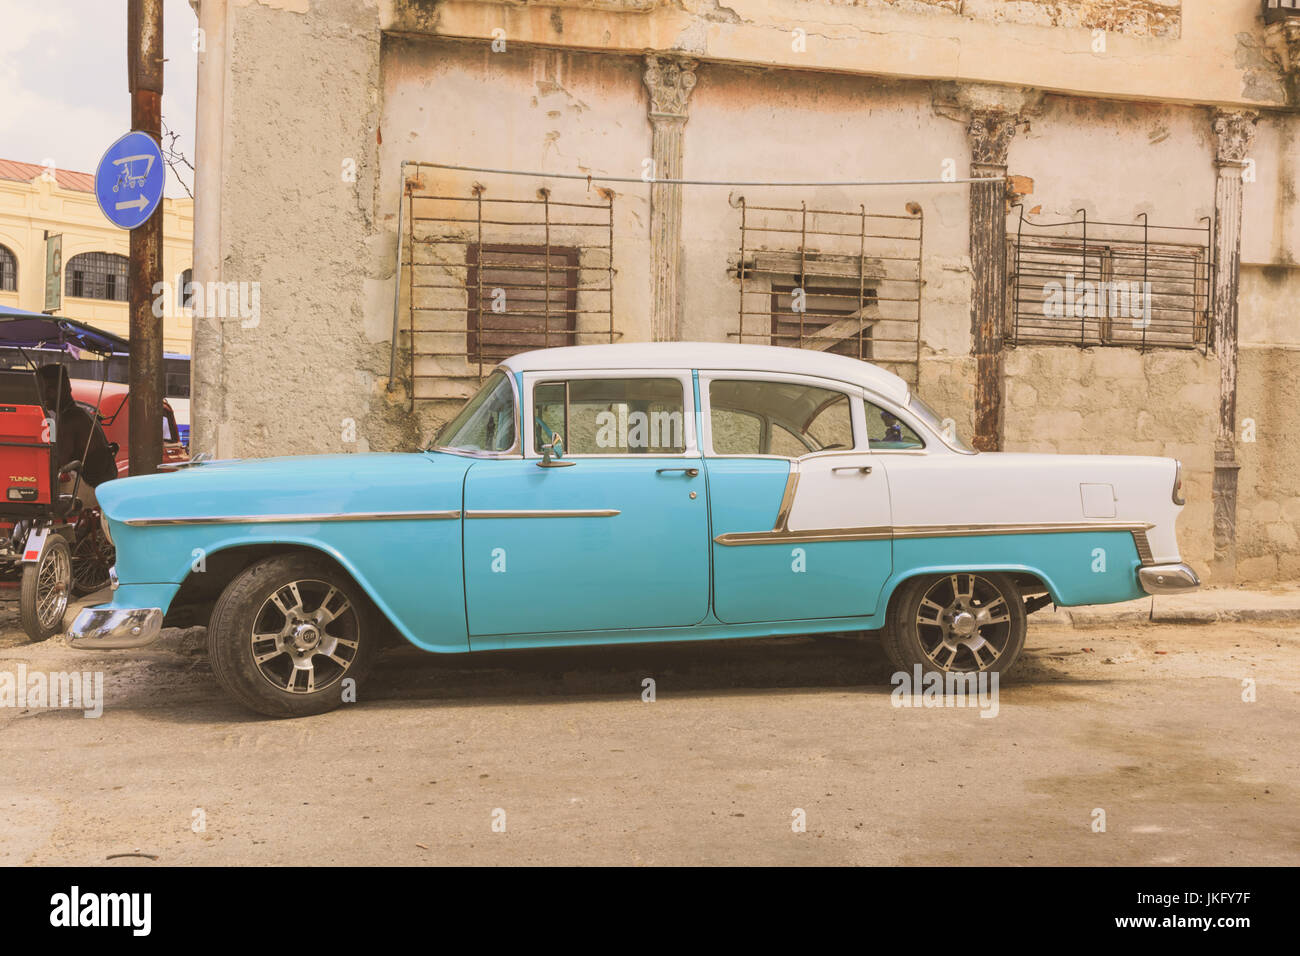 Blue American classic car in street, Old Havana, Cuba Stock Photo